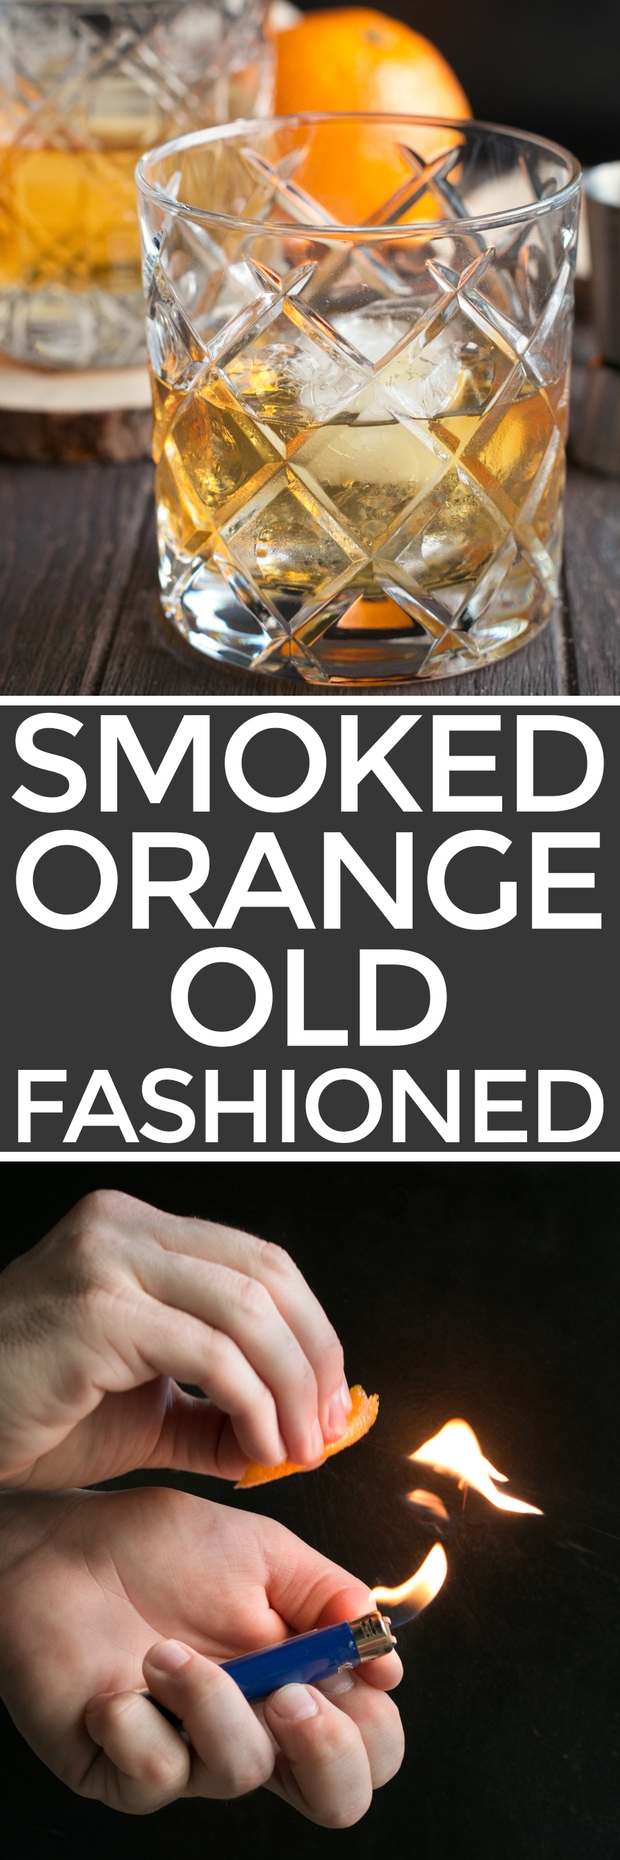 Smoked Orange Old Fashioned | Cake 'n Knife